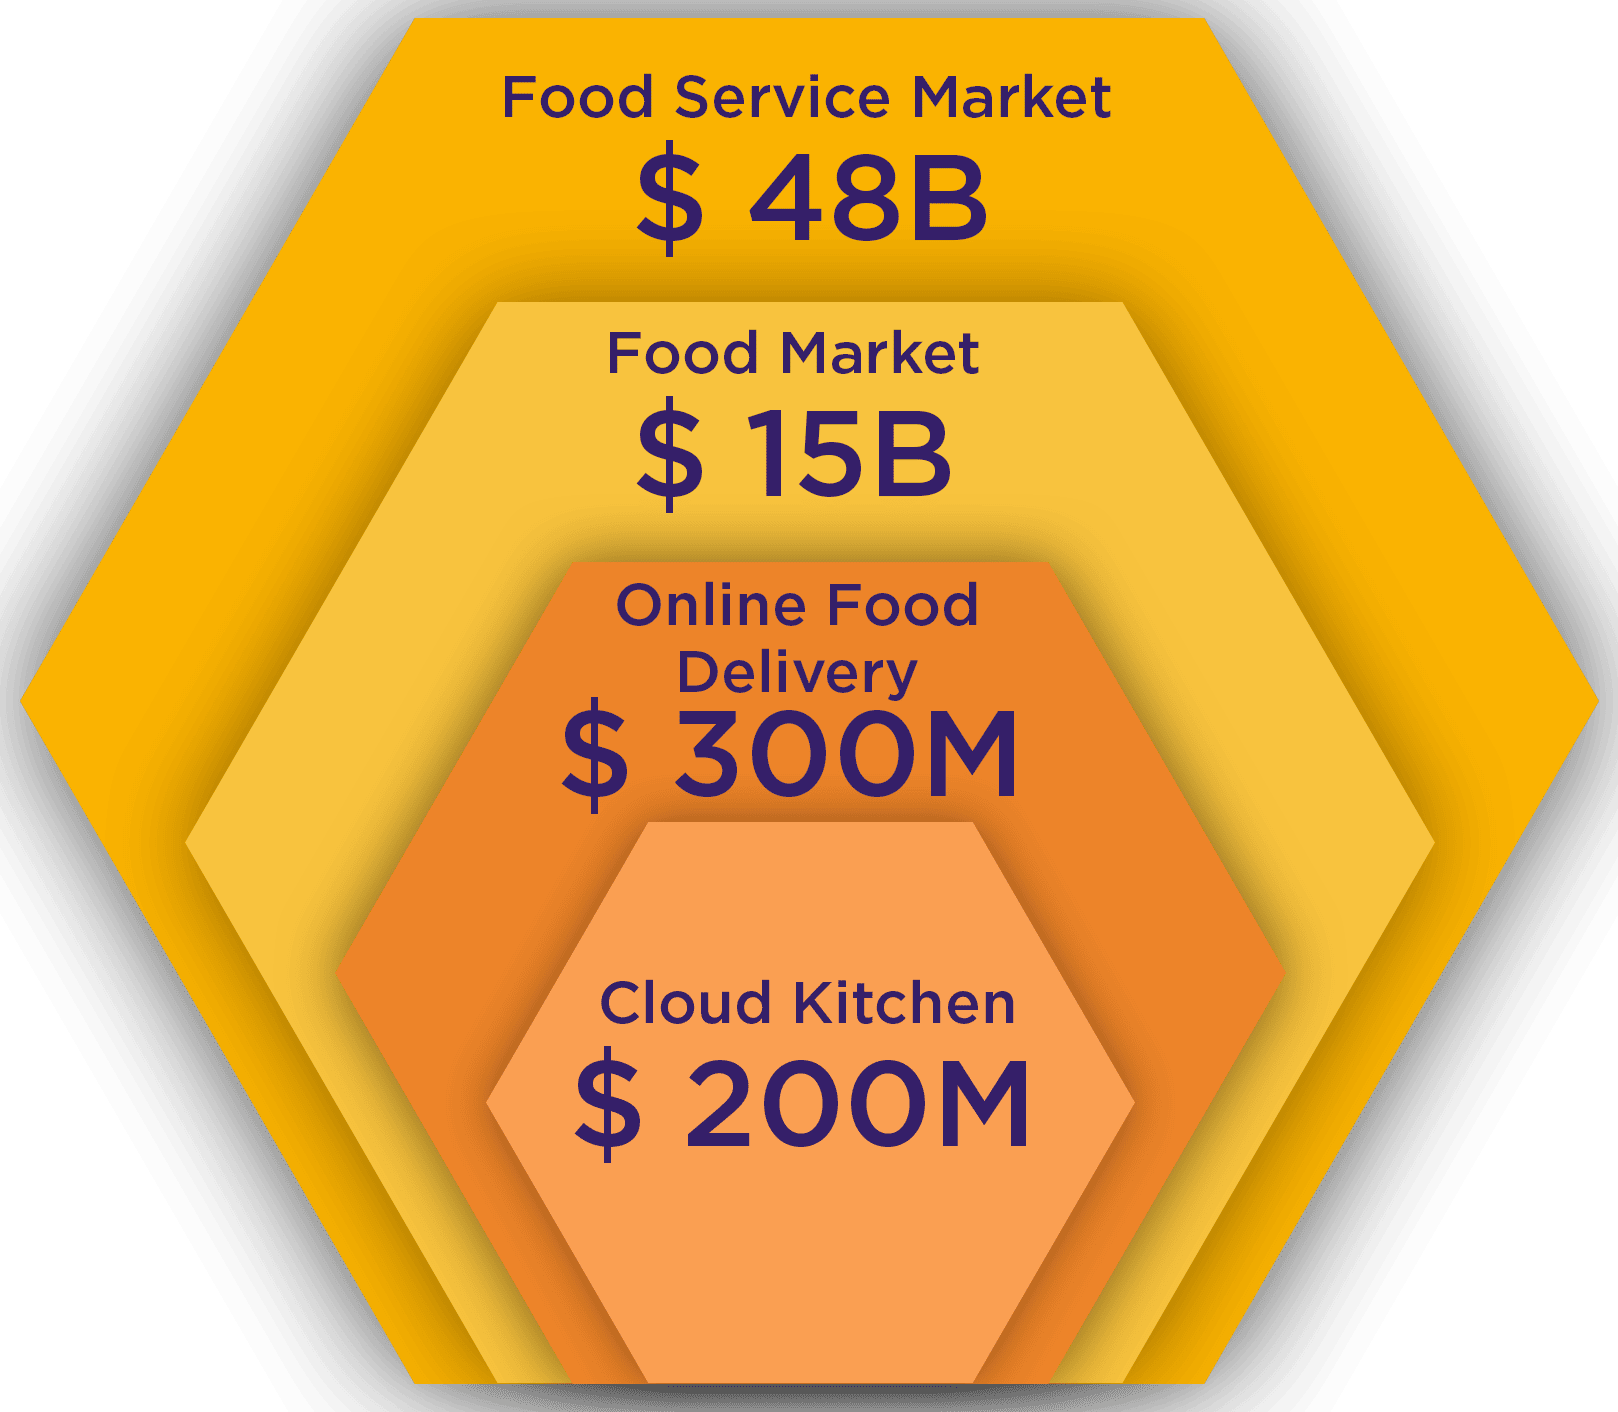 Food Service market size Info